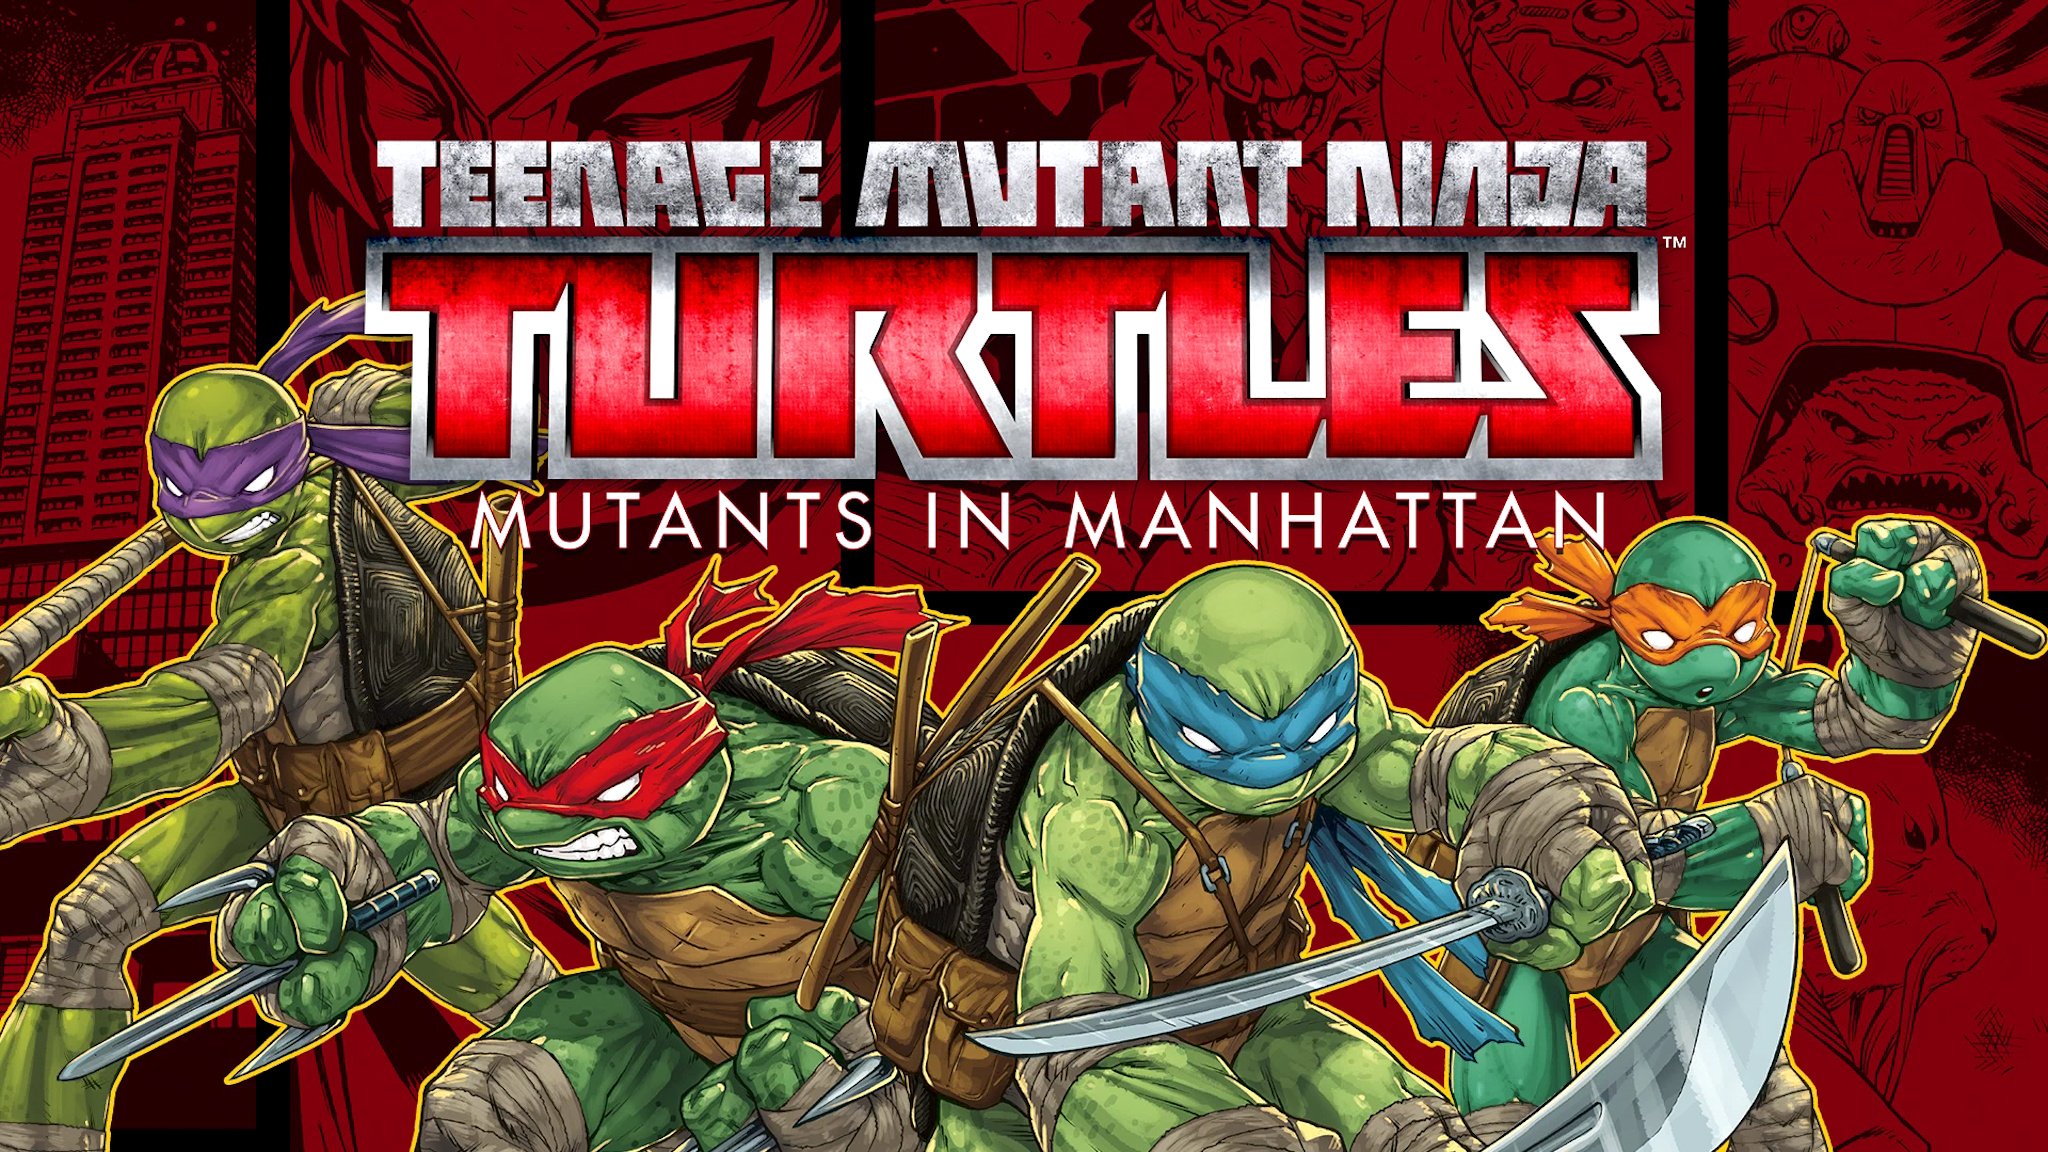 Tmnt manhattan. Teenage Mutant Ninja Turtles: Mutants in Manhattan (2016). TMNT Mutant Mayhem 2023. Черепашки ниндзя Mutants in Manhattan. Черепашки ниндзя игра.